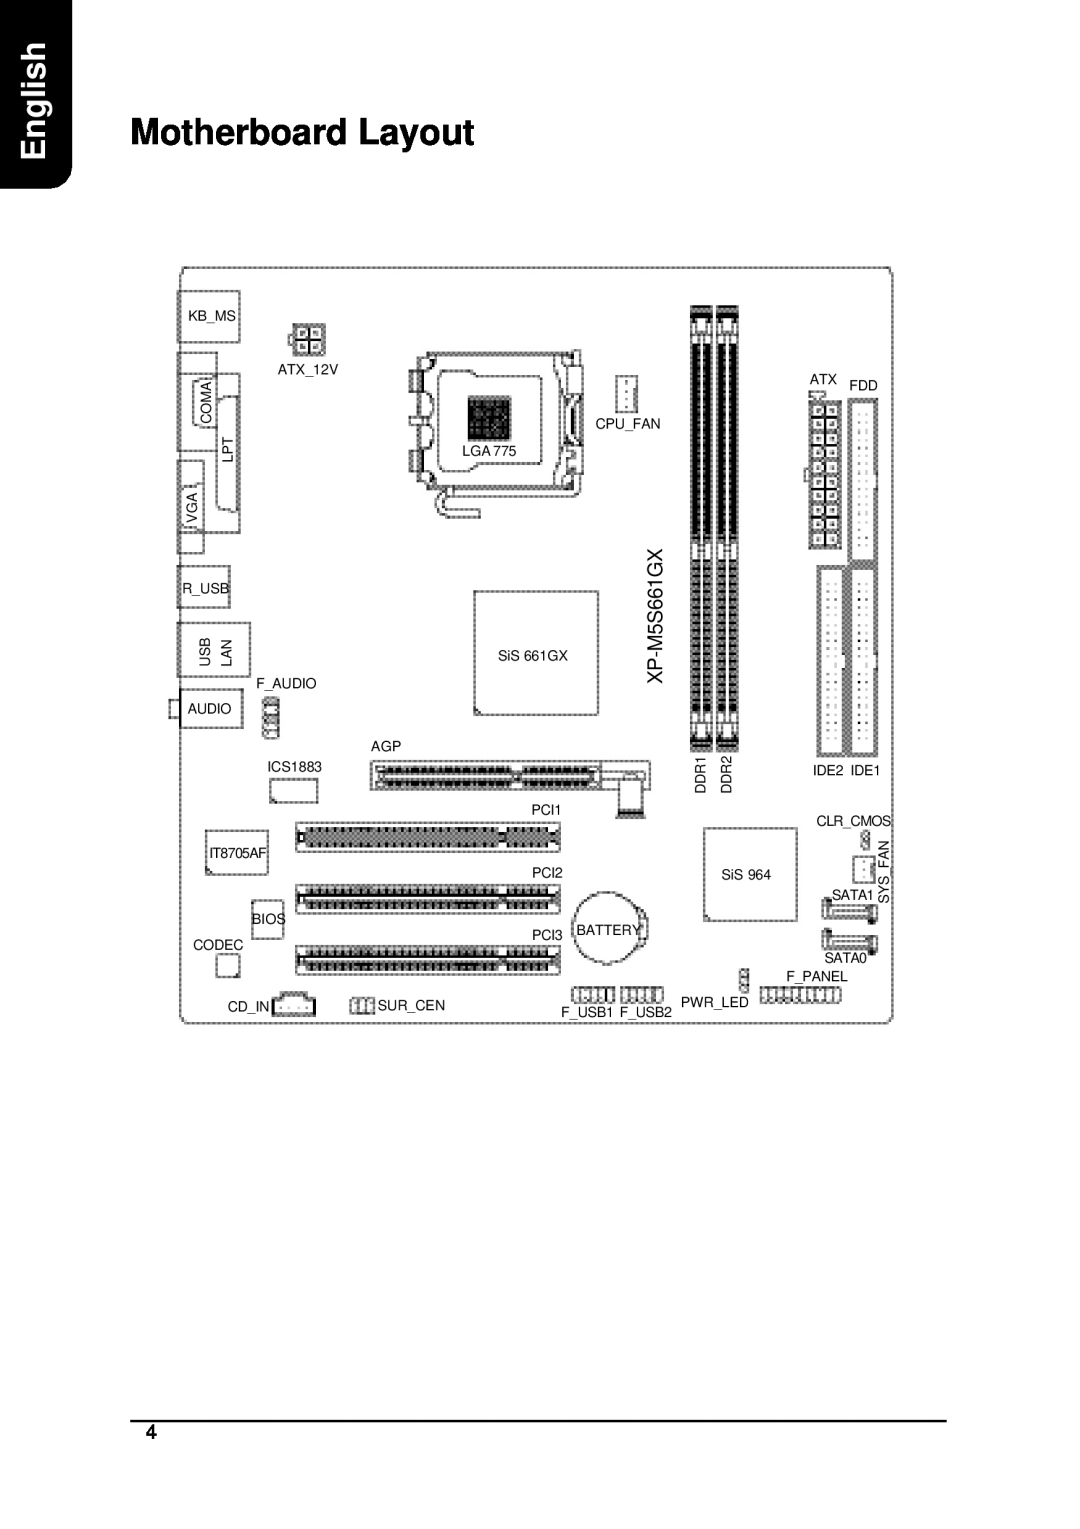 Intel XP-M5S661GX user manual Motherboard Layout, English 